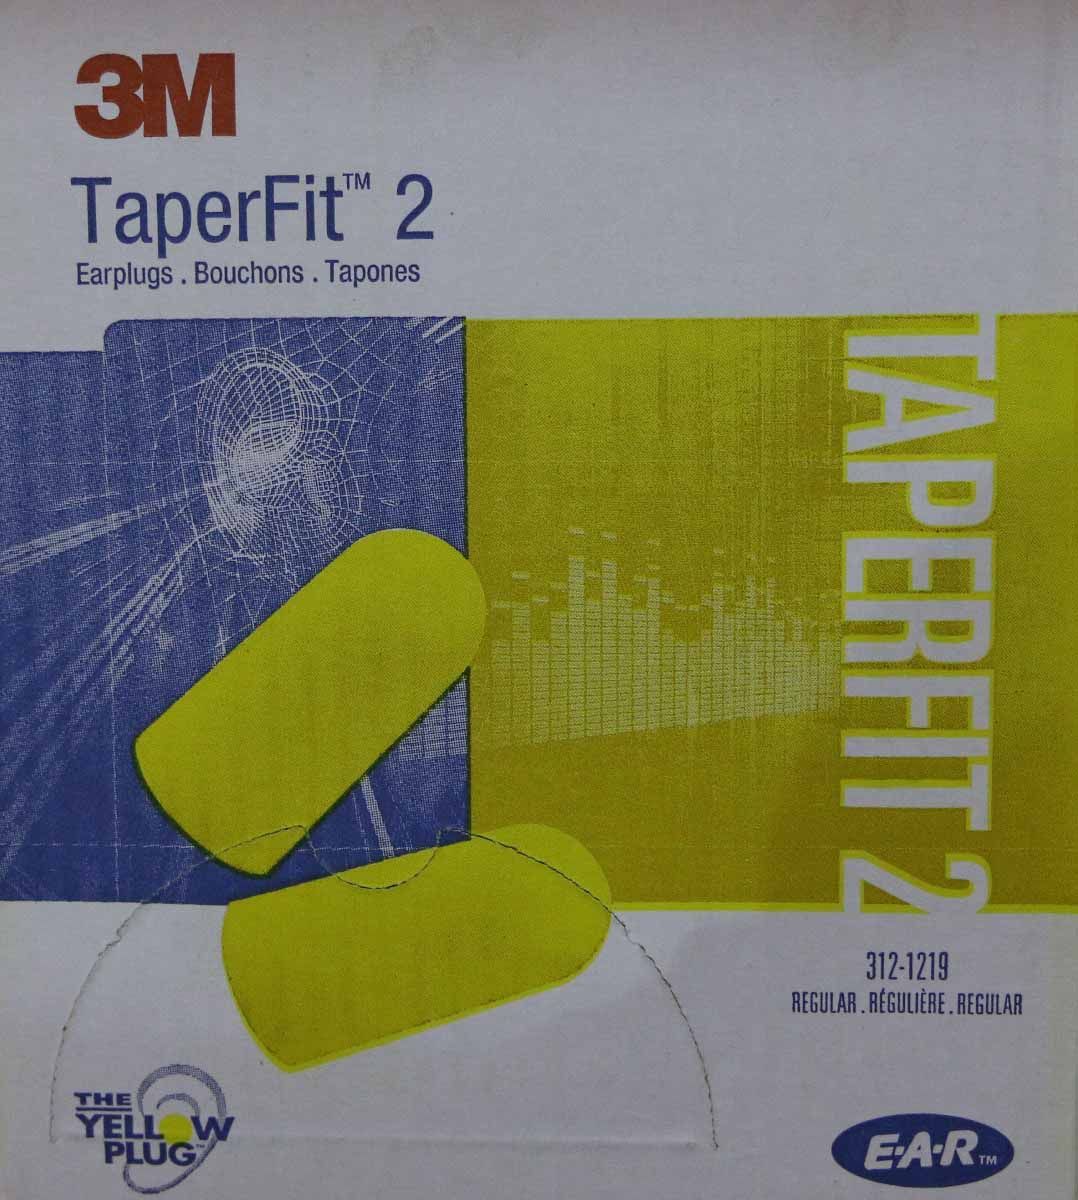 3M TaperFit2 Single-Use Earplugs